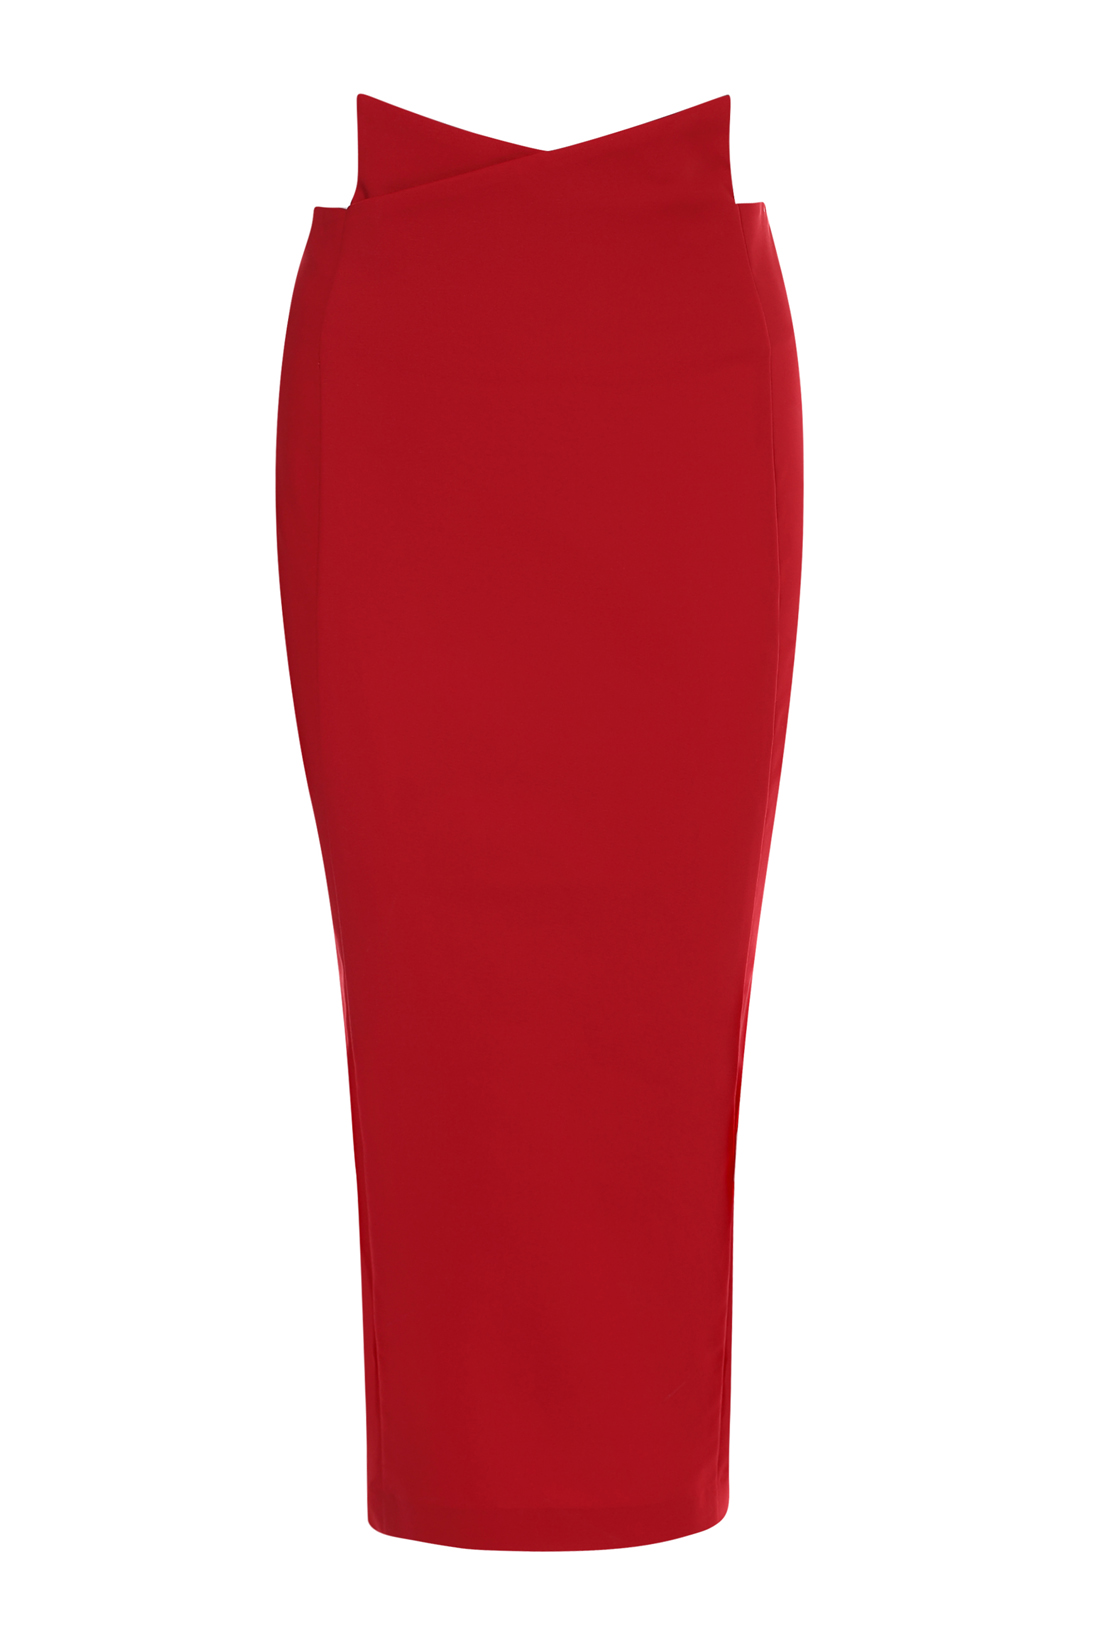 Красная юбка-миди (арт. baon B478038), размер XL, цвет красный Красная юбка-миди (арт. baon B478038) - фото 2